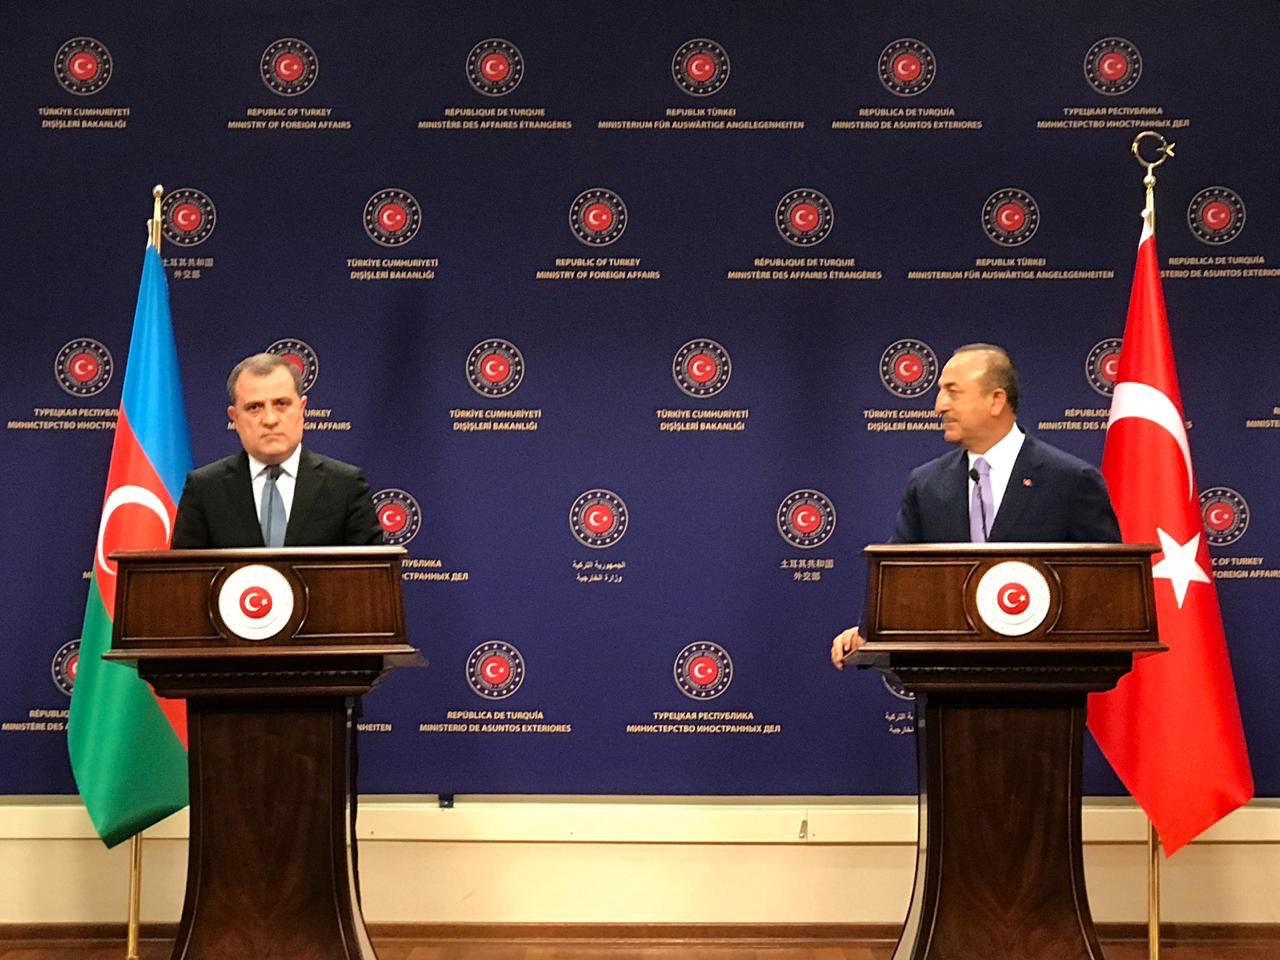 Джейхун Байрамов: Позиция Азербайджана по нагорно-карабахскому конфликту неизменна - ВИДЕО